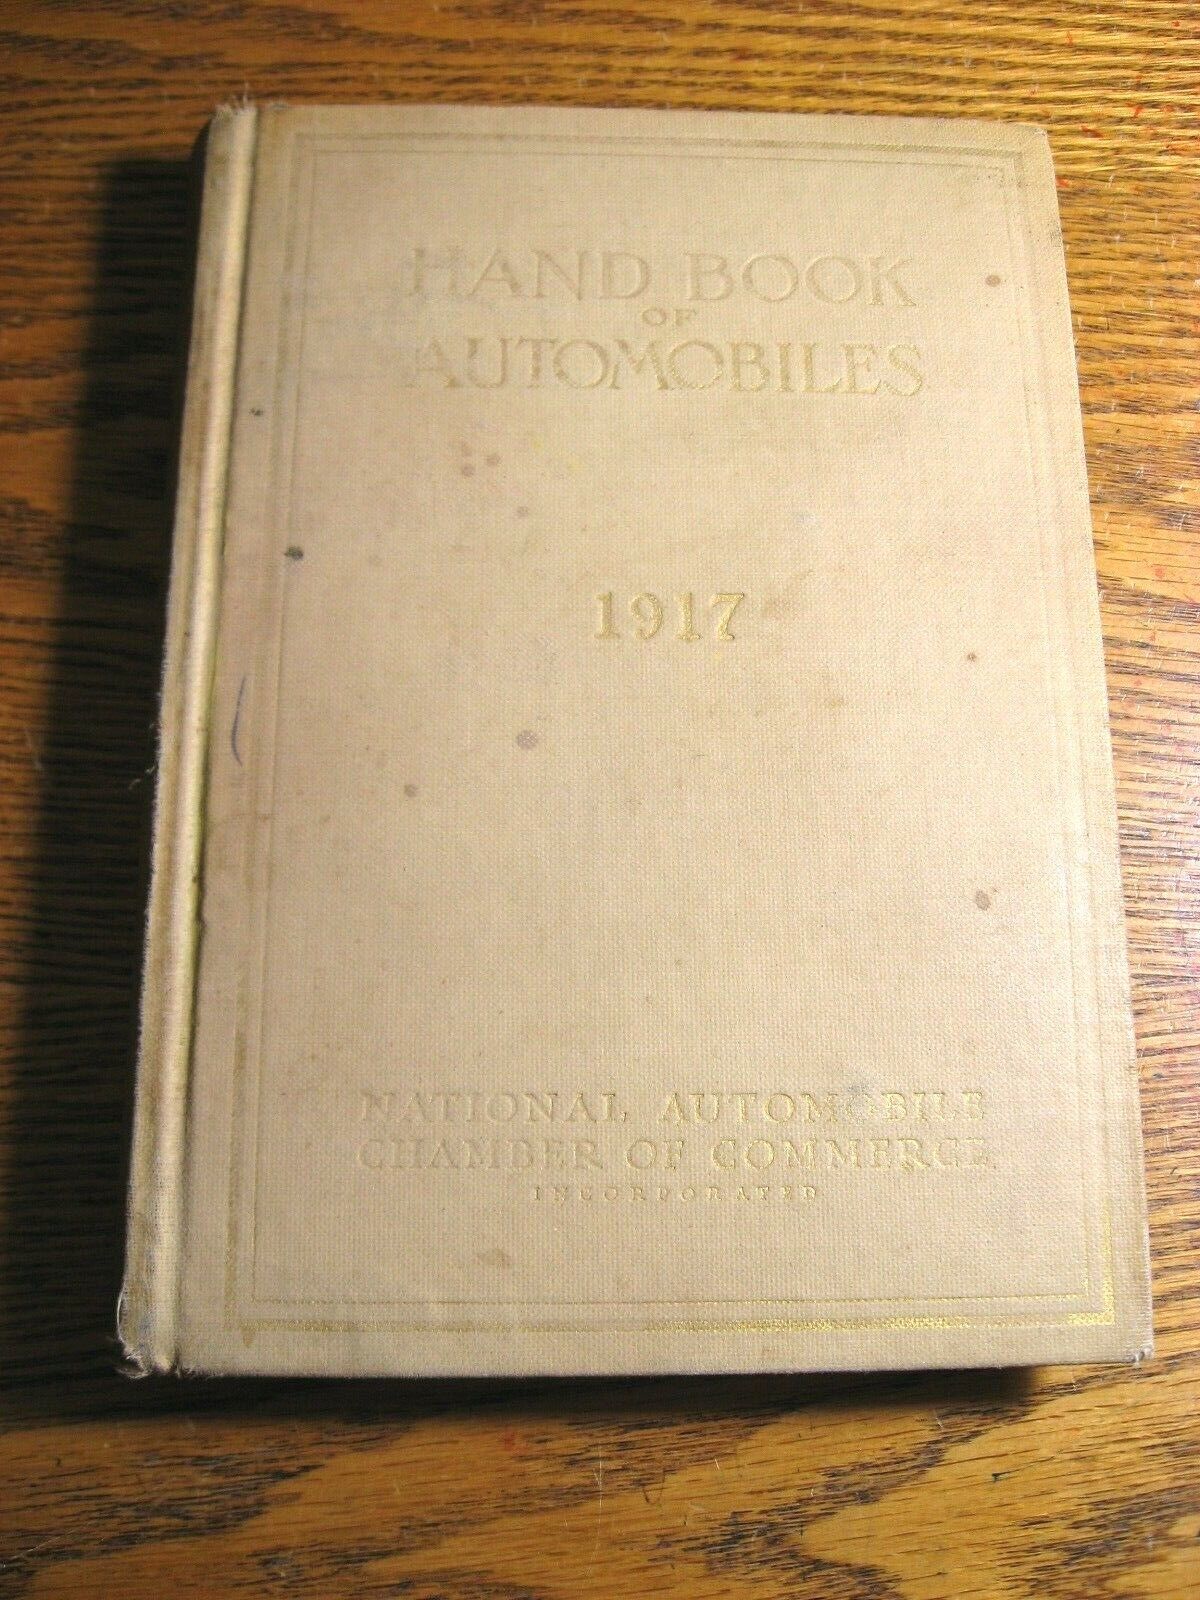 1917 Handbook of Automobiles Hand Book, McFarlan Buick Packard Cadillac - $98.01